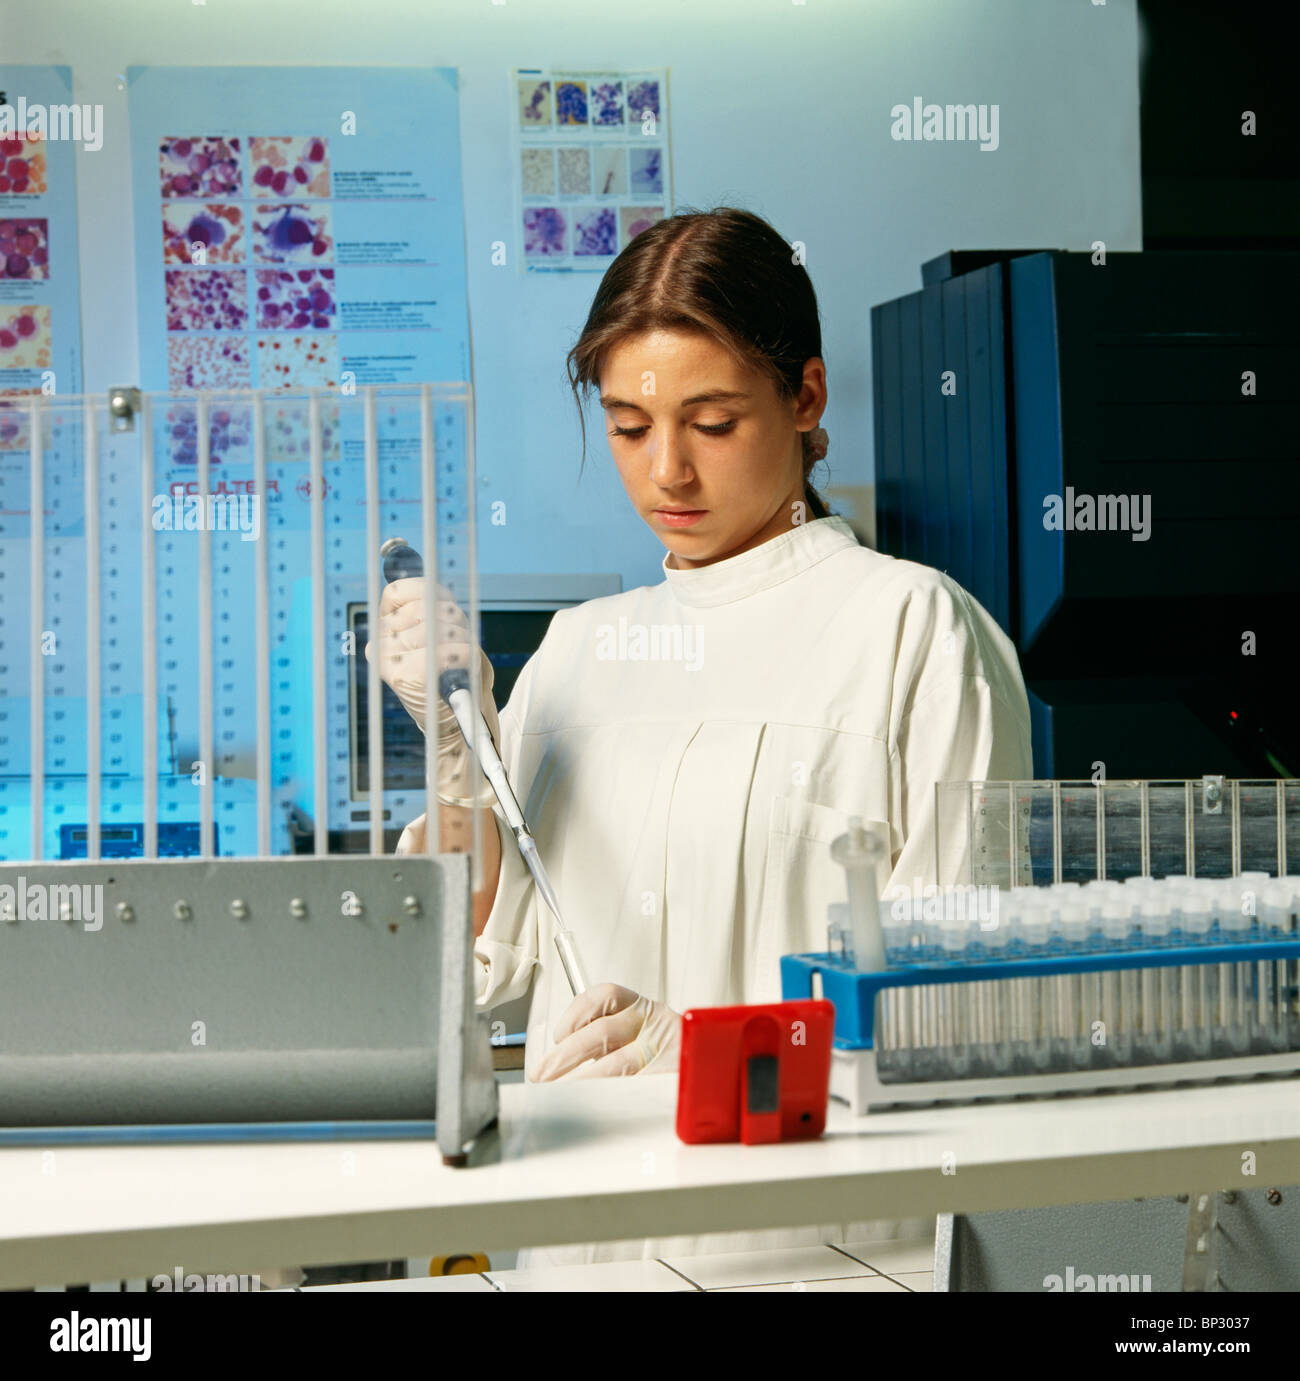 Woman lab technician in laboratory Stock Photo